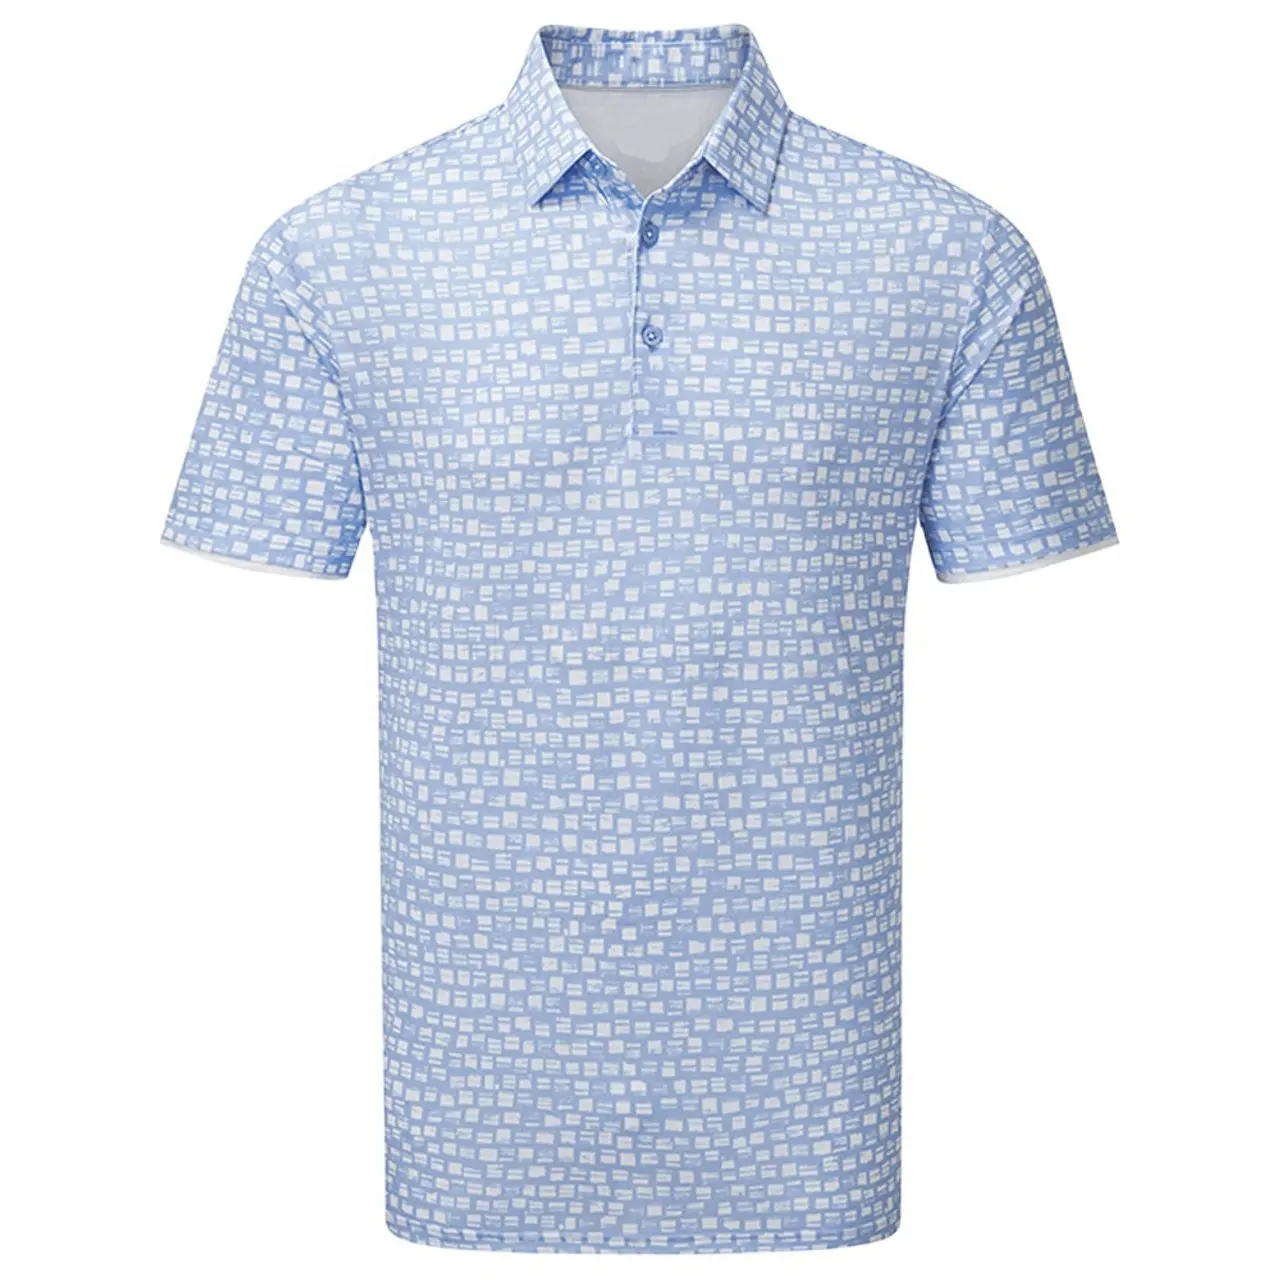 Patroon Golfpolo Voor Mannen Hoge Kwaliteit Vocht Wicking Polyester En Spandex Golfkleding 4-Way Stretch Heren Shirts